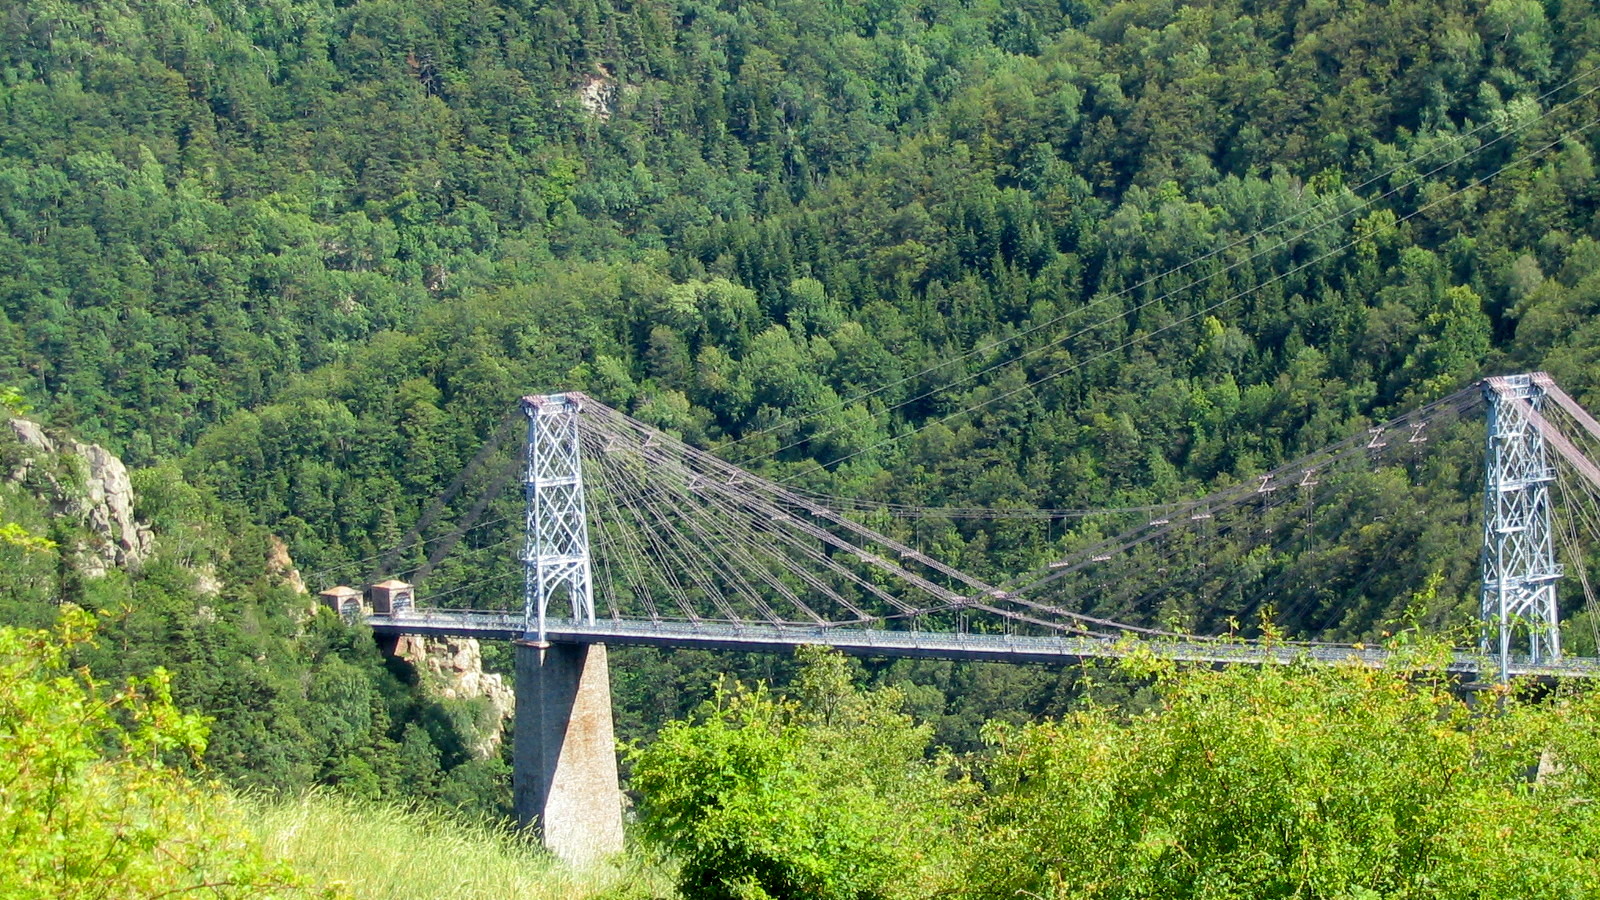 The Gisclard bridge